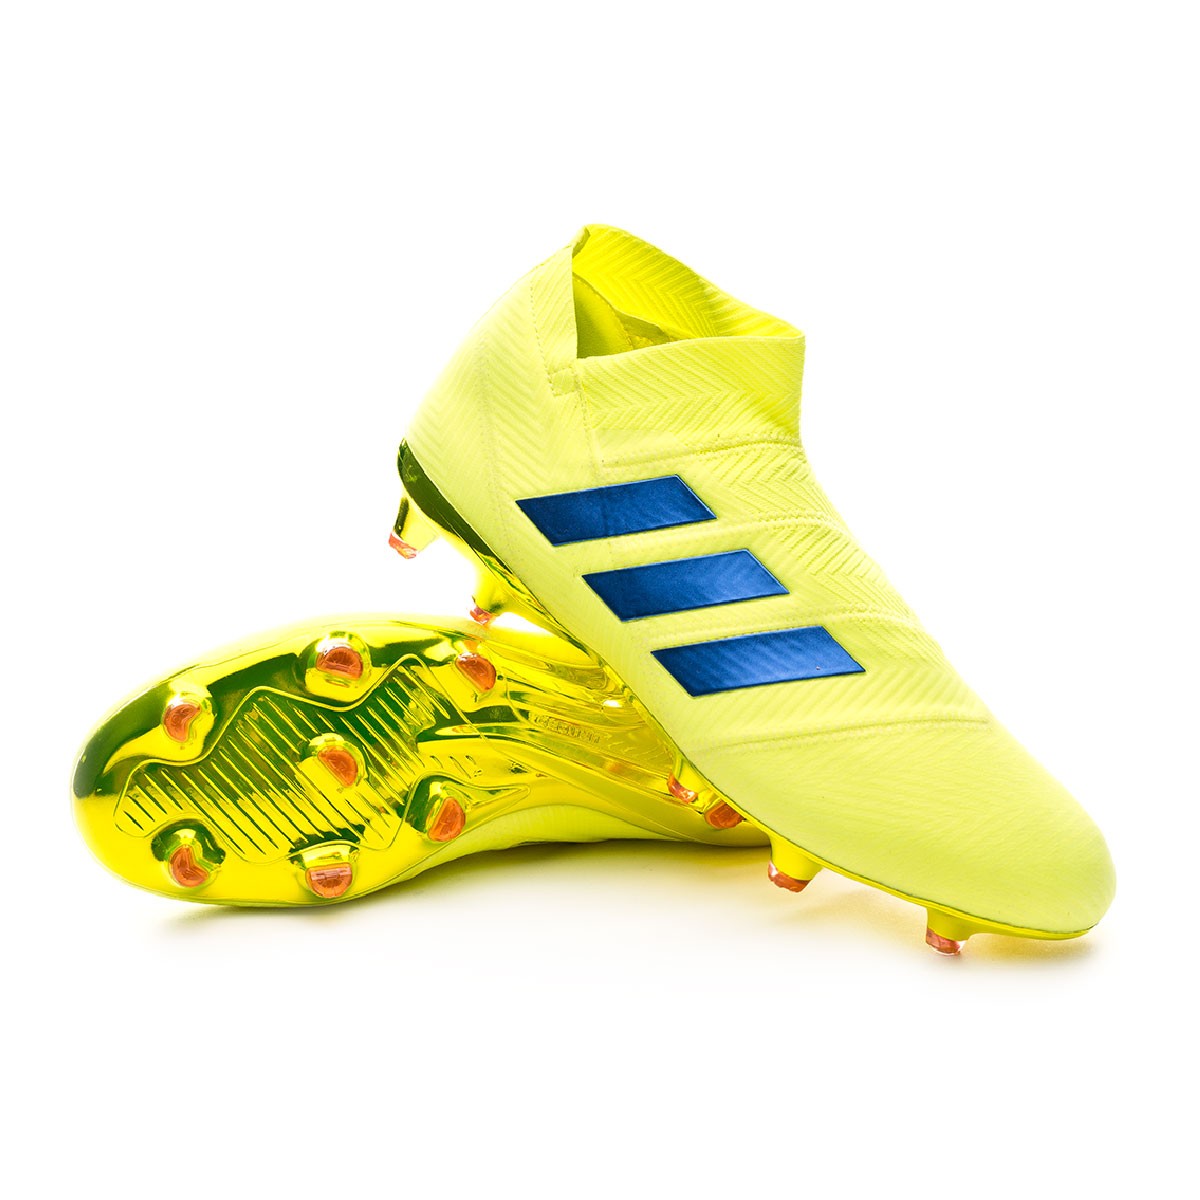 Bota de fútbol adidas Nemeziz 18+ FG Solar yellow-Football blue-Active red  - Tienda de fútbol Fútbol Emotion